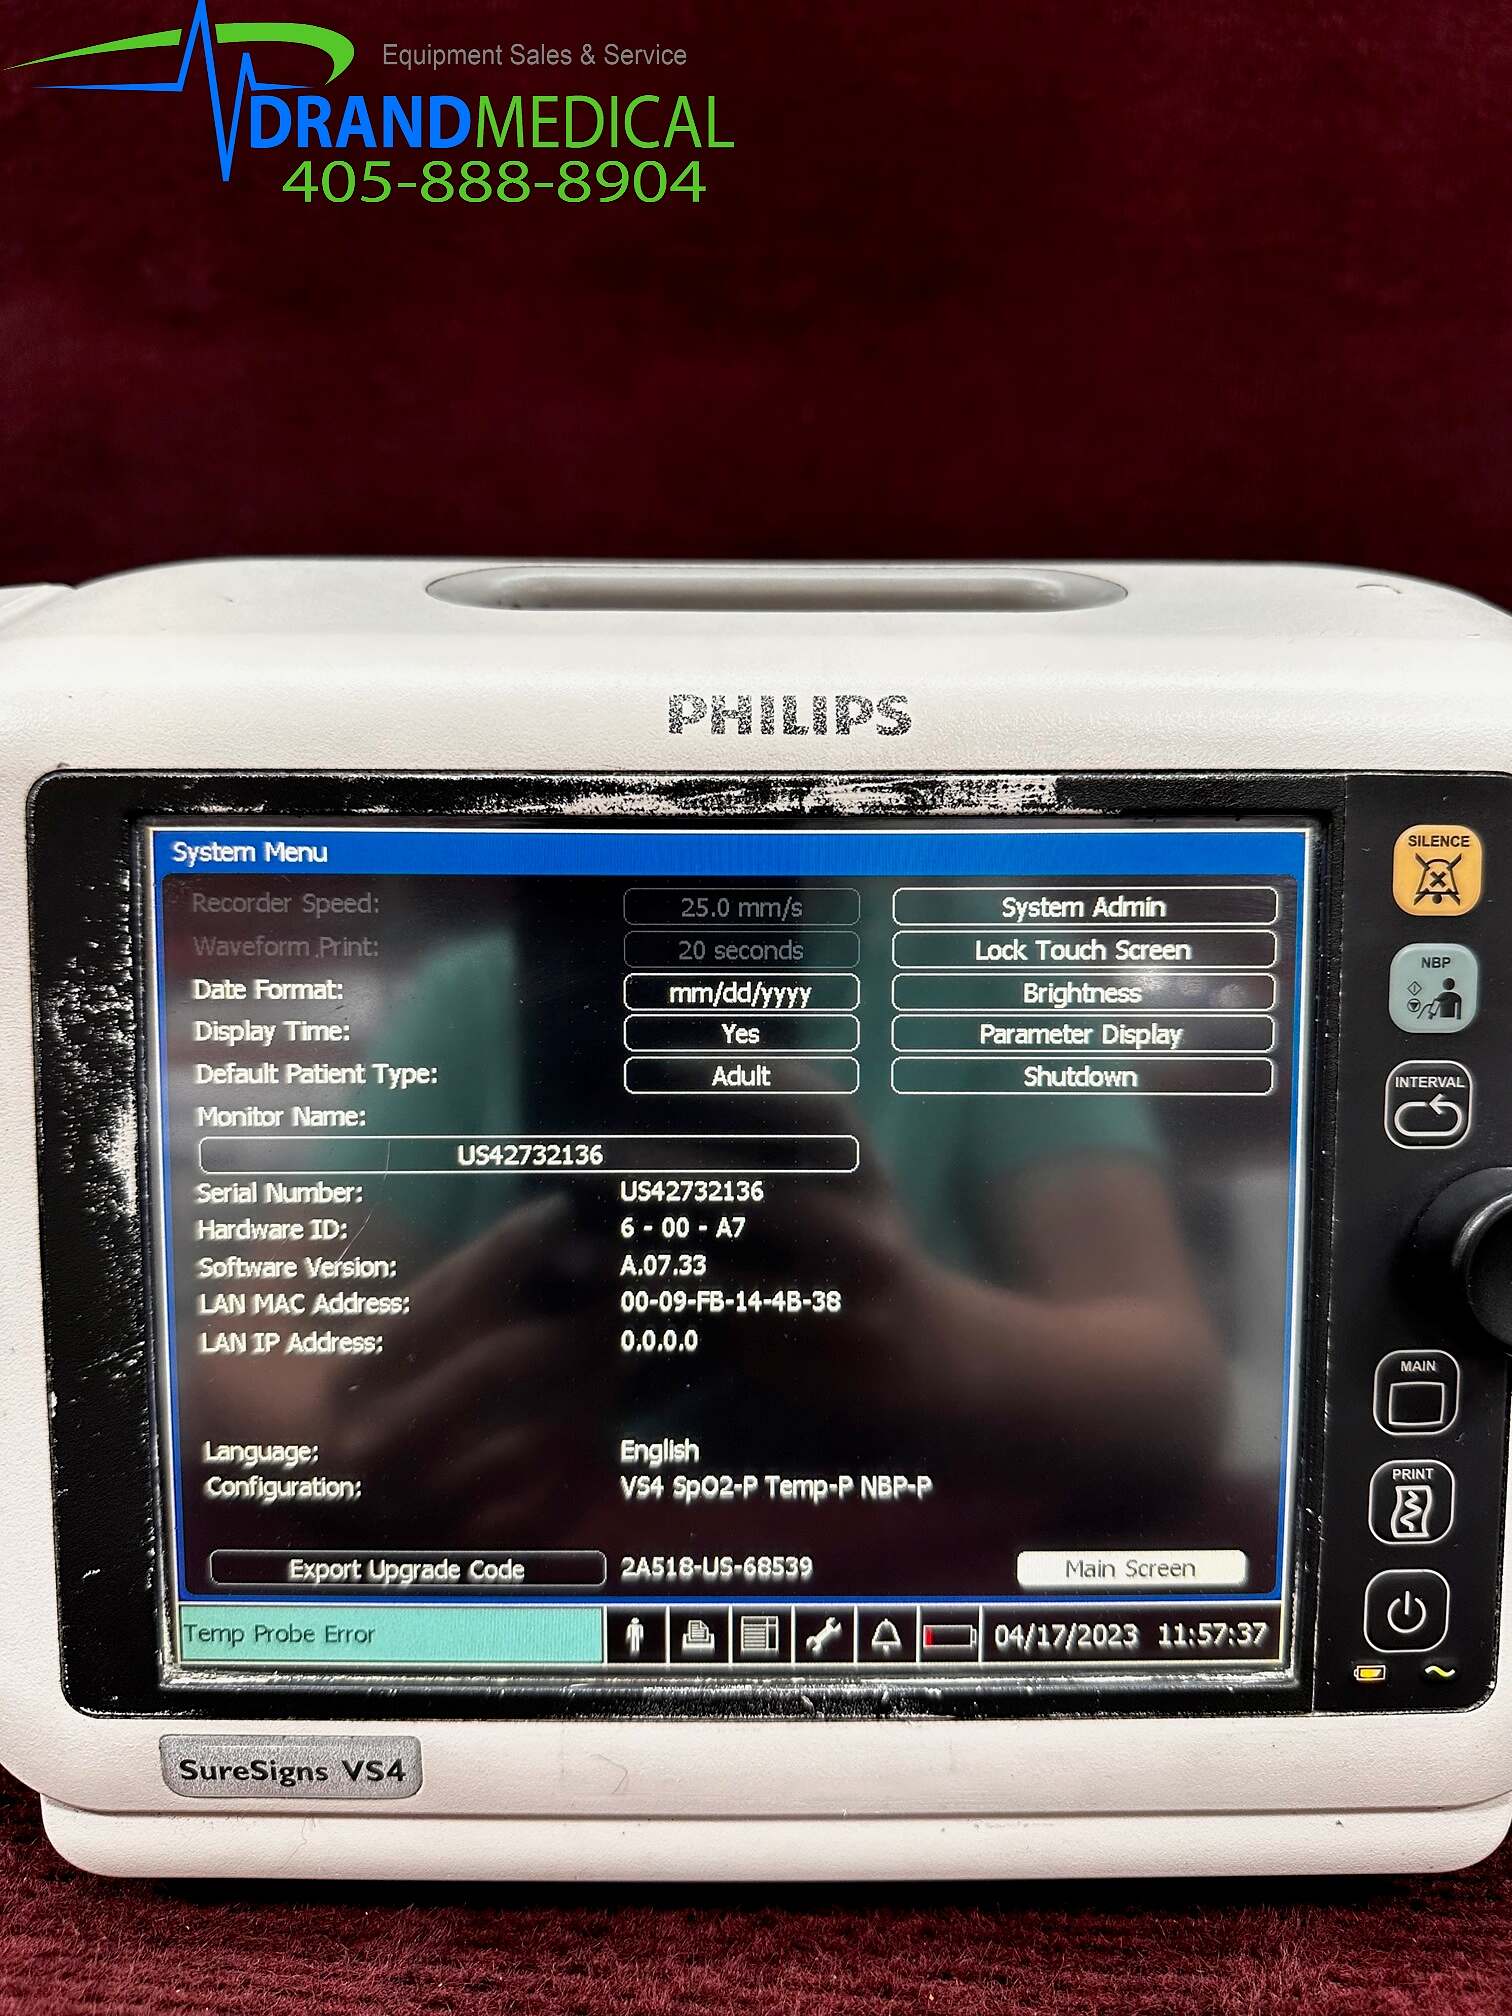 Philips SureSigns VM4 Vital Signs Monitor - Avante Health Solutions